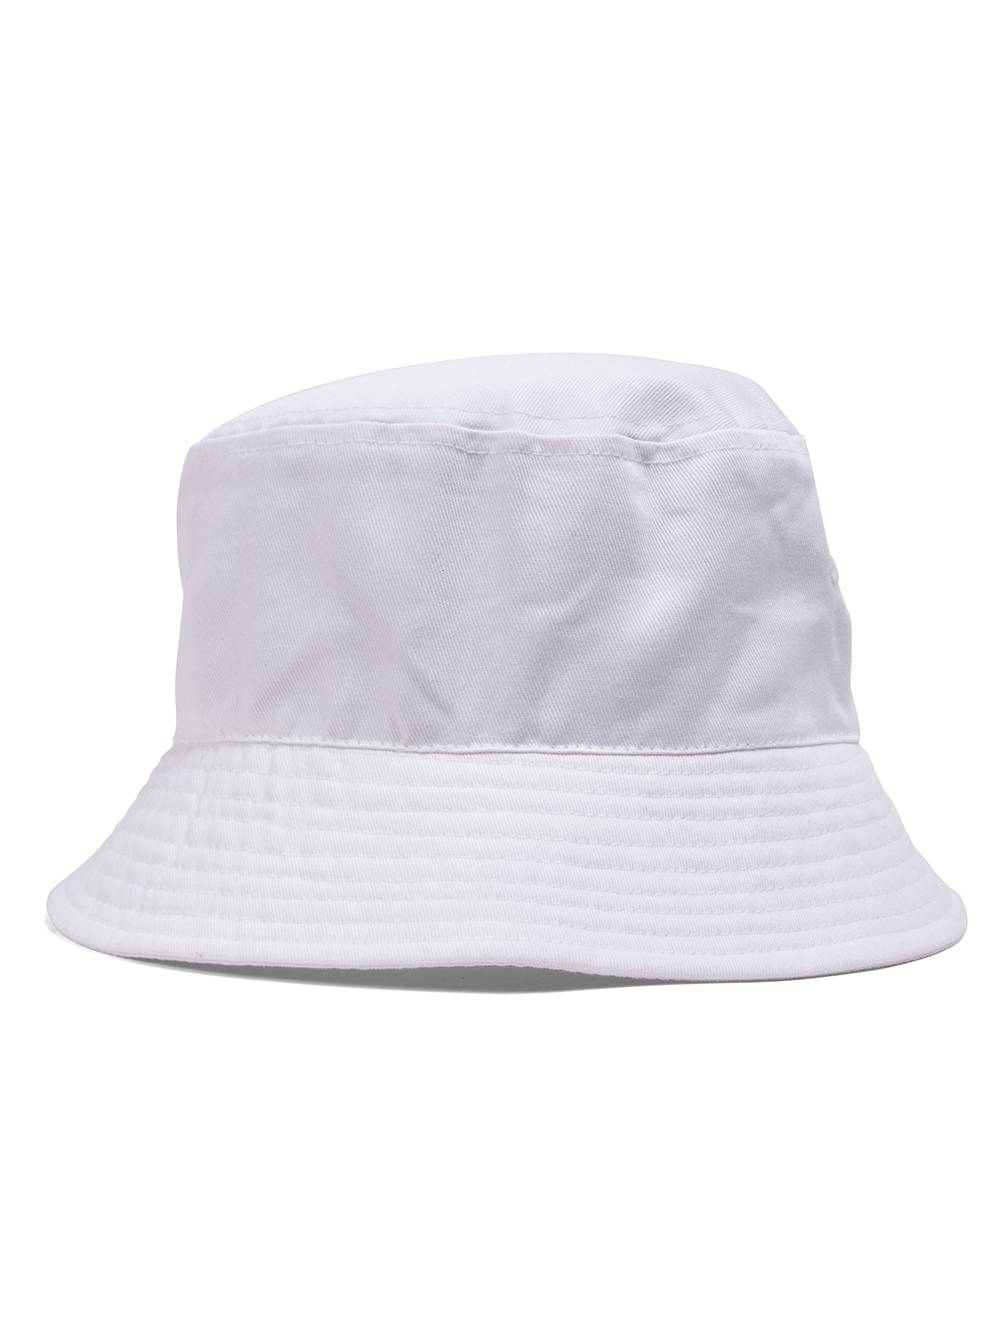 Bucket Hat For Men Women - Cotton Packable Fishing Cap, White L/XL - image 2 of 3